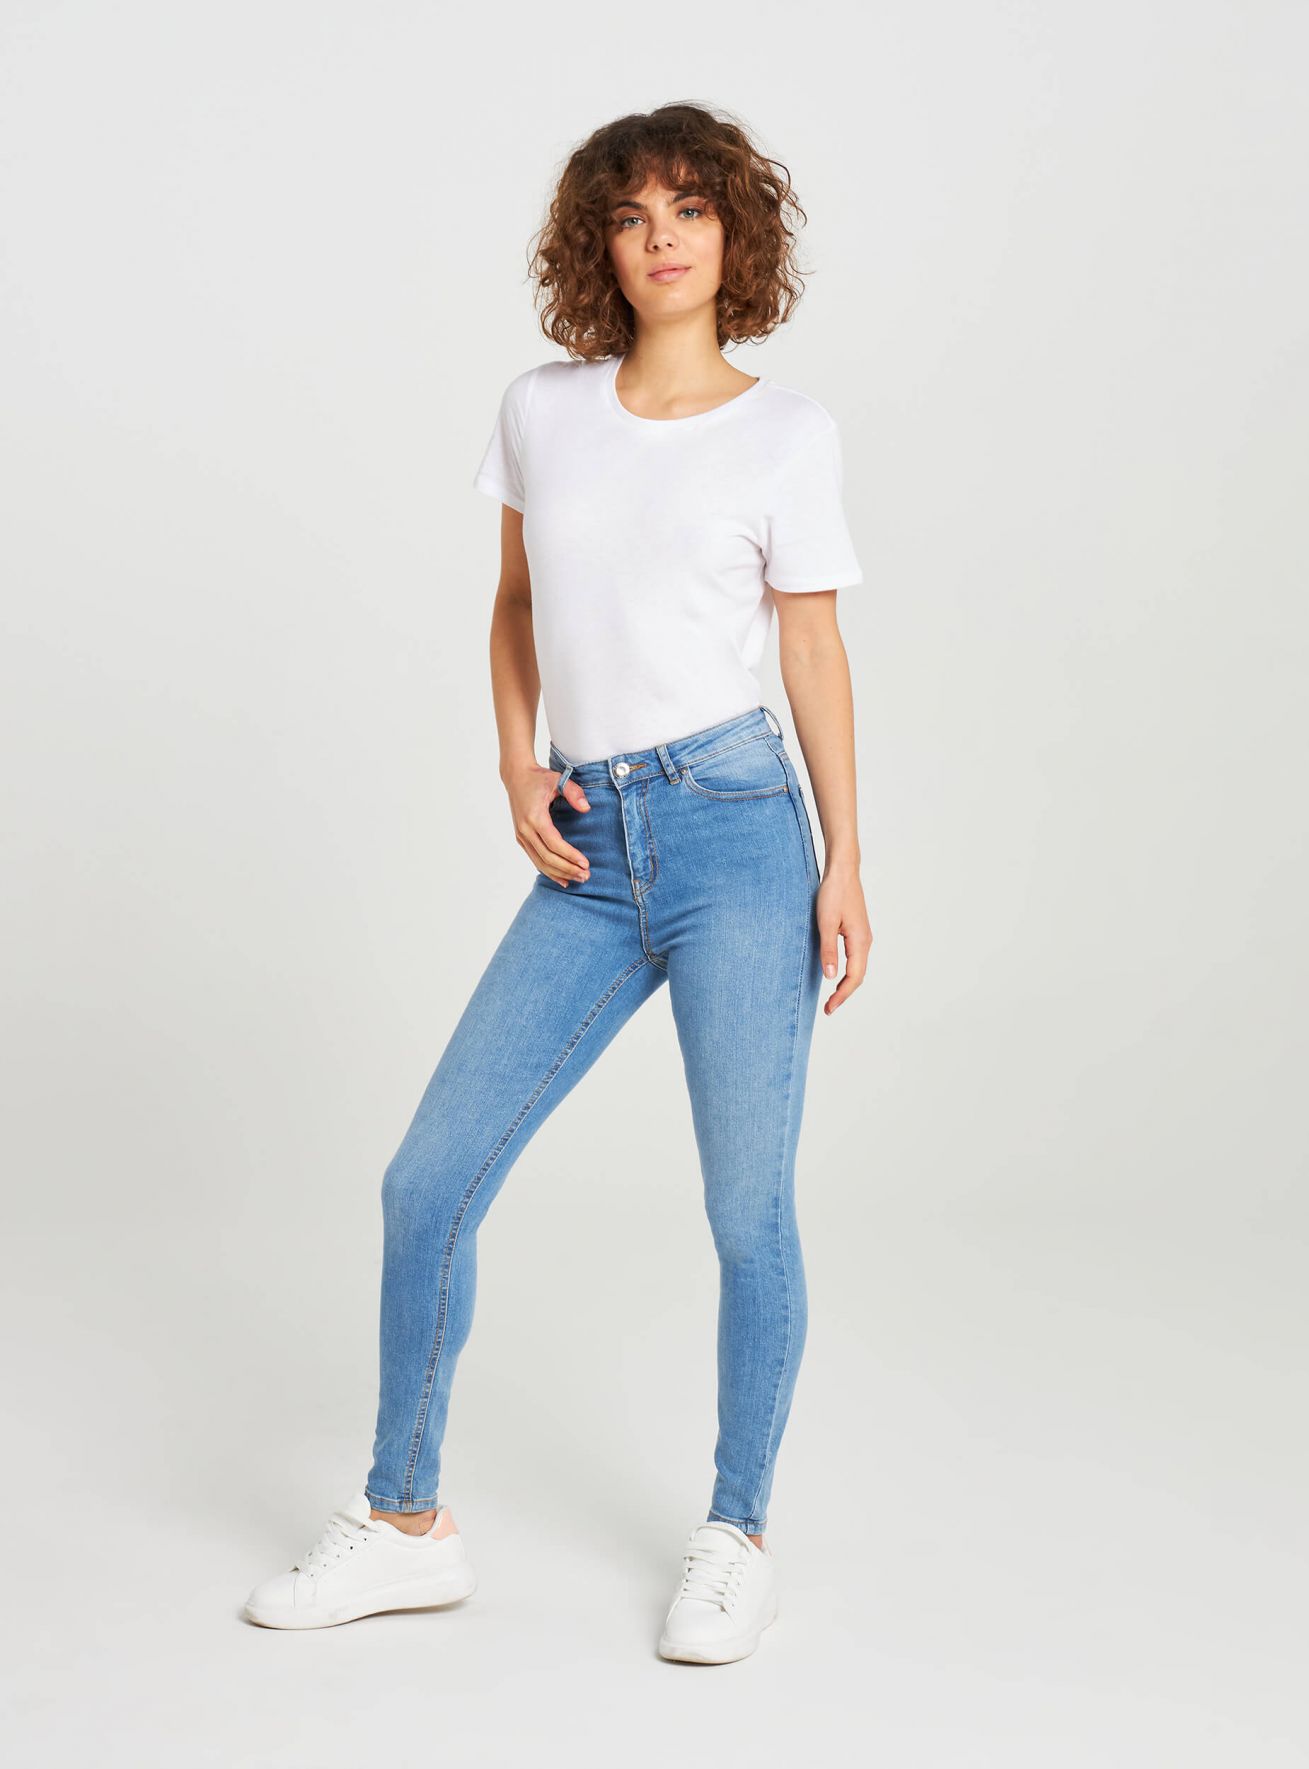 stretch jeans online